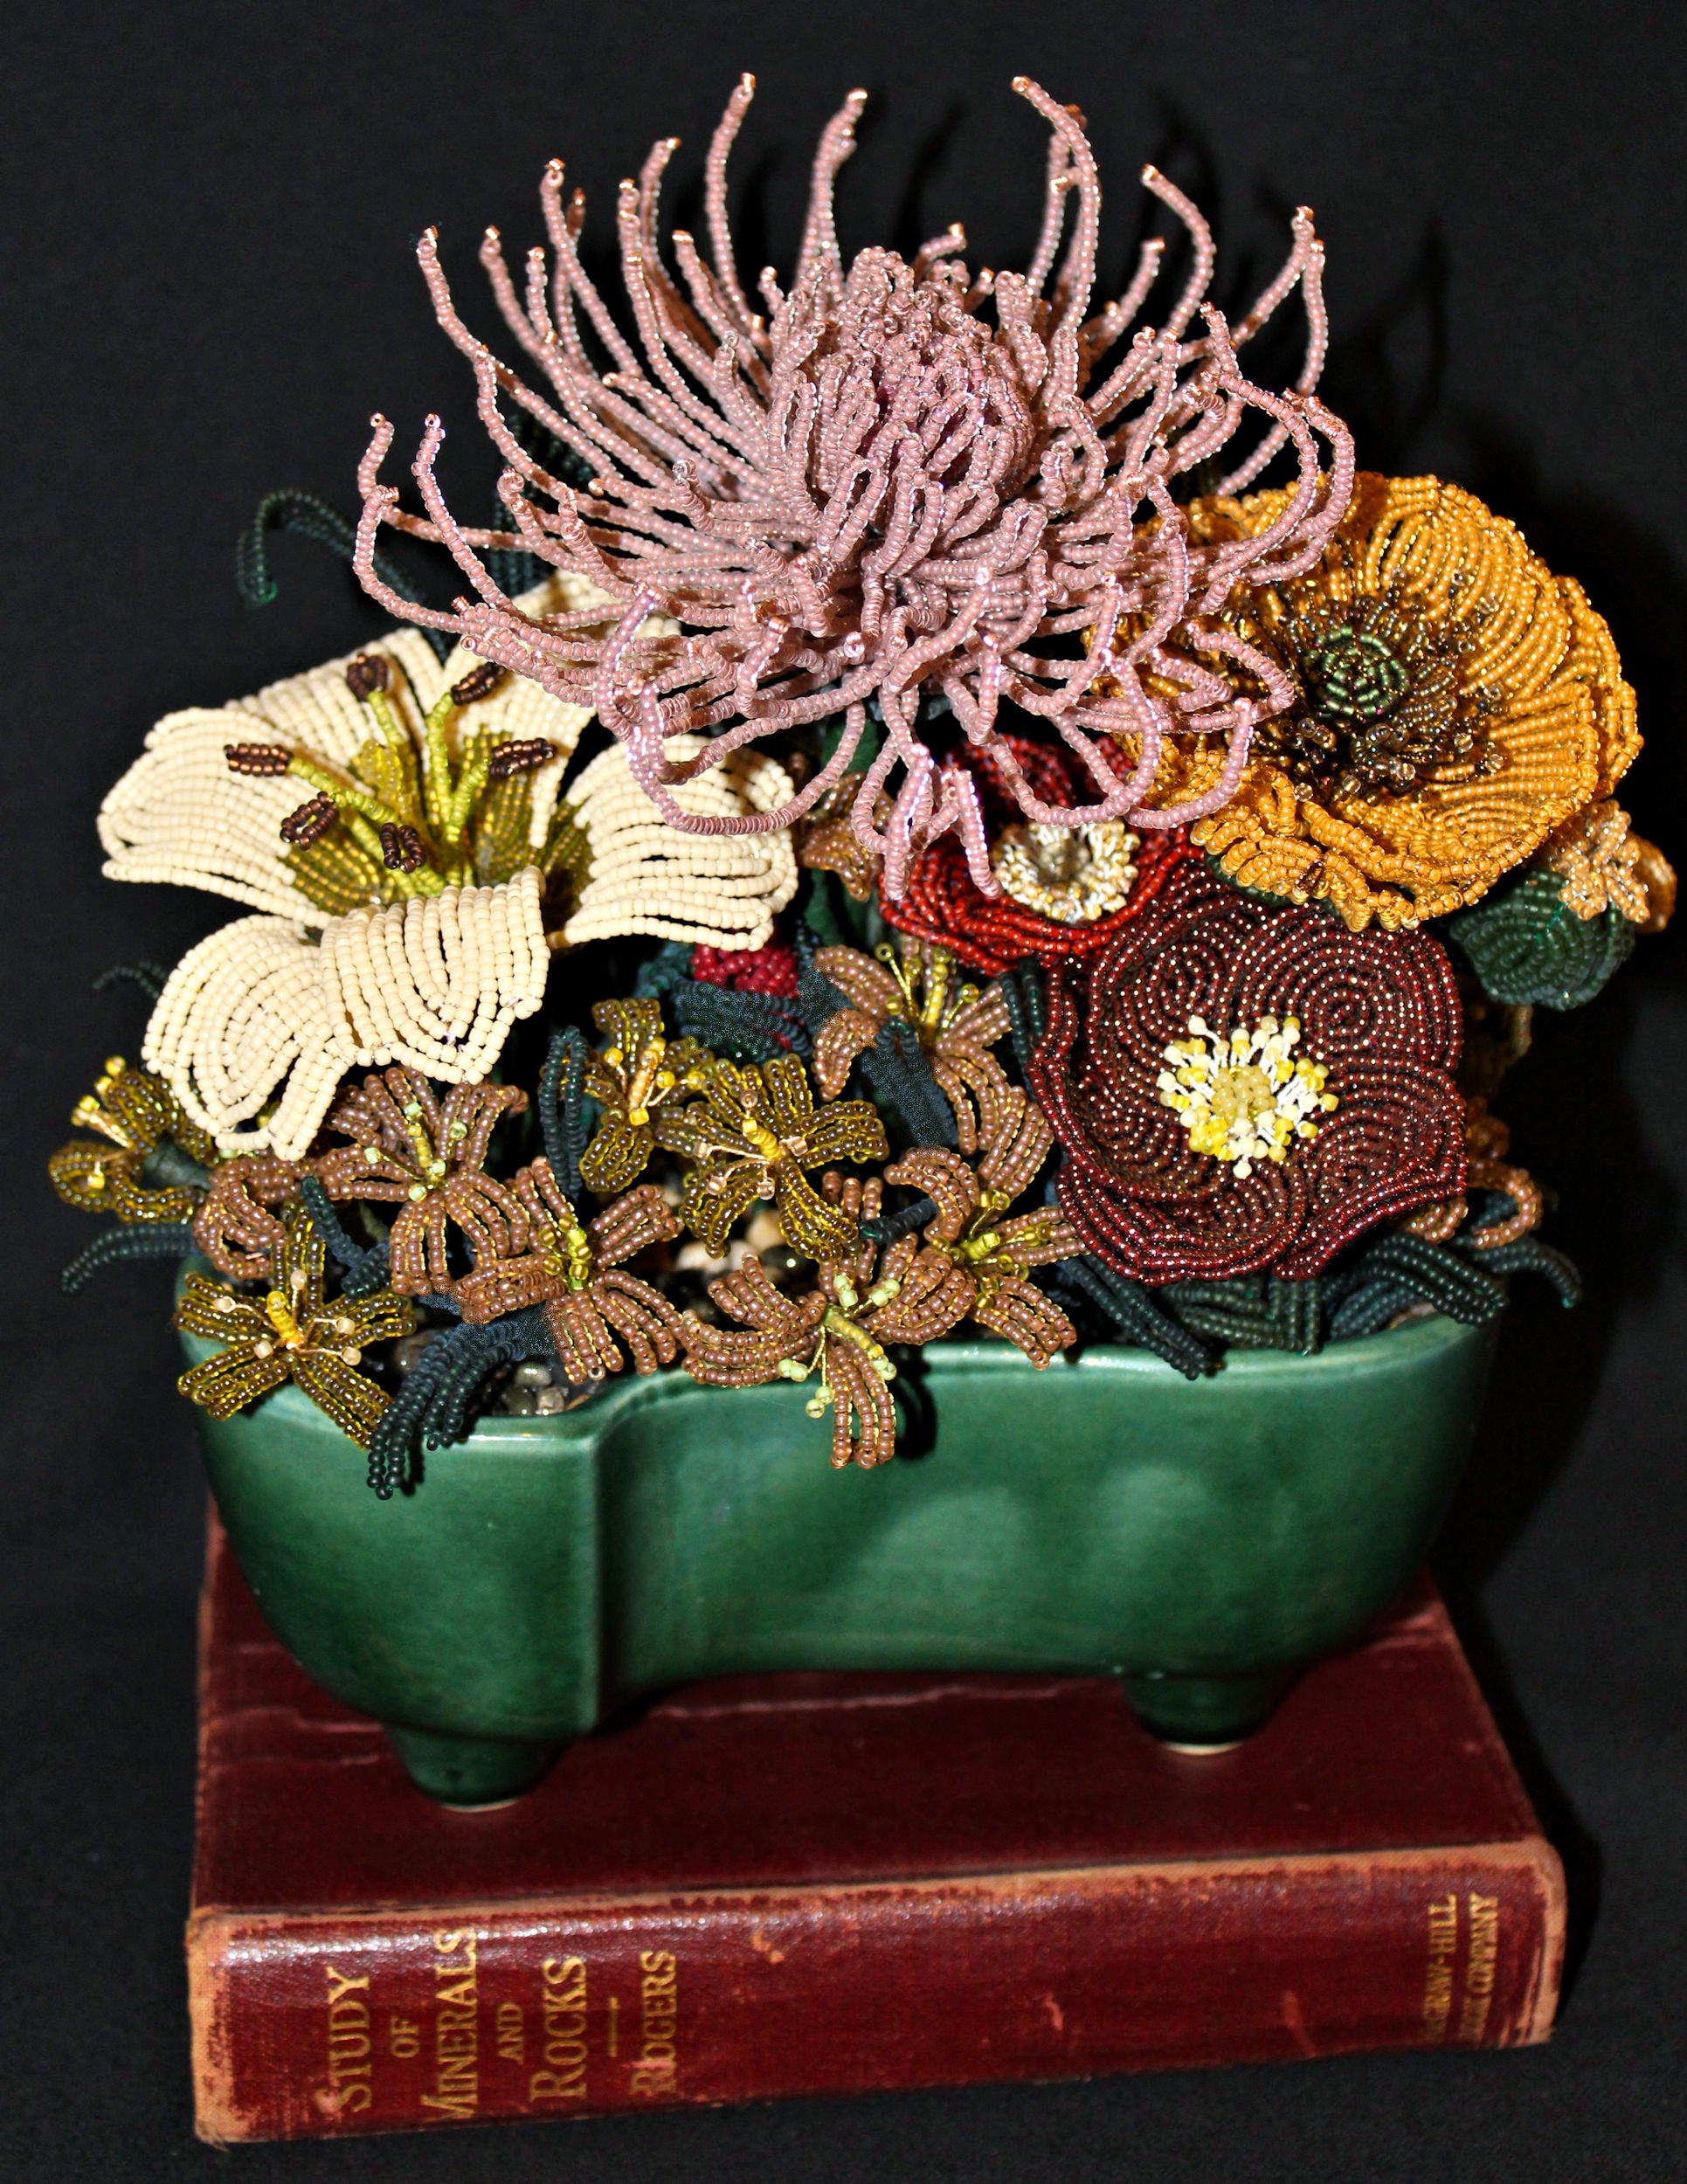 Merle Oberon (Spider Mum, Lilies, Poppies, & Beach Roses)